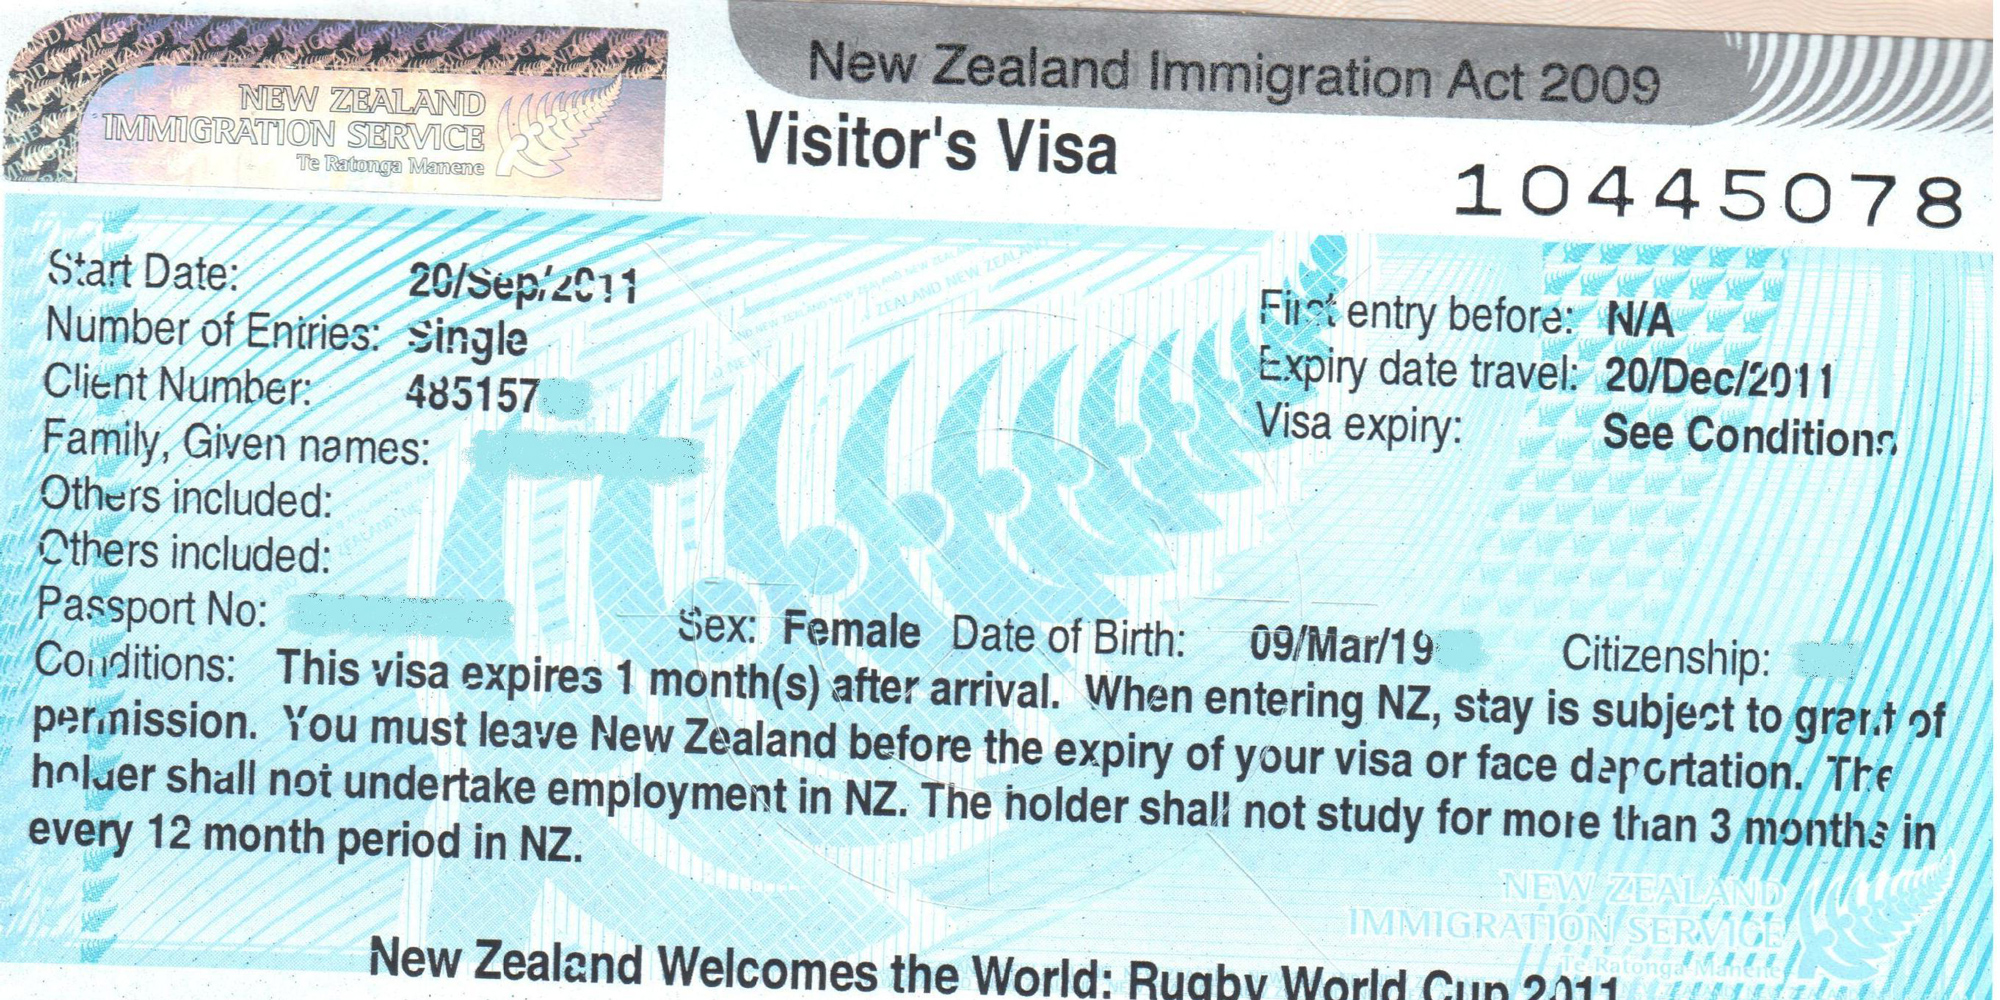 New Zealand Immigration Website 0746